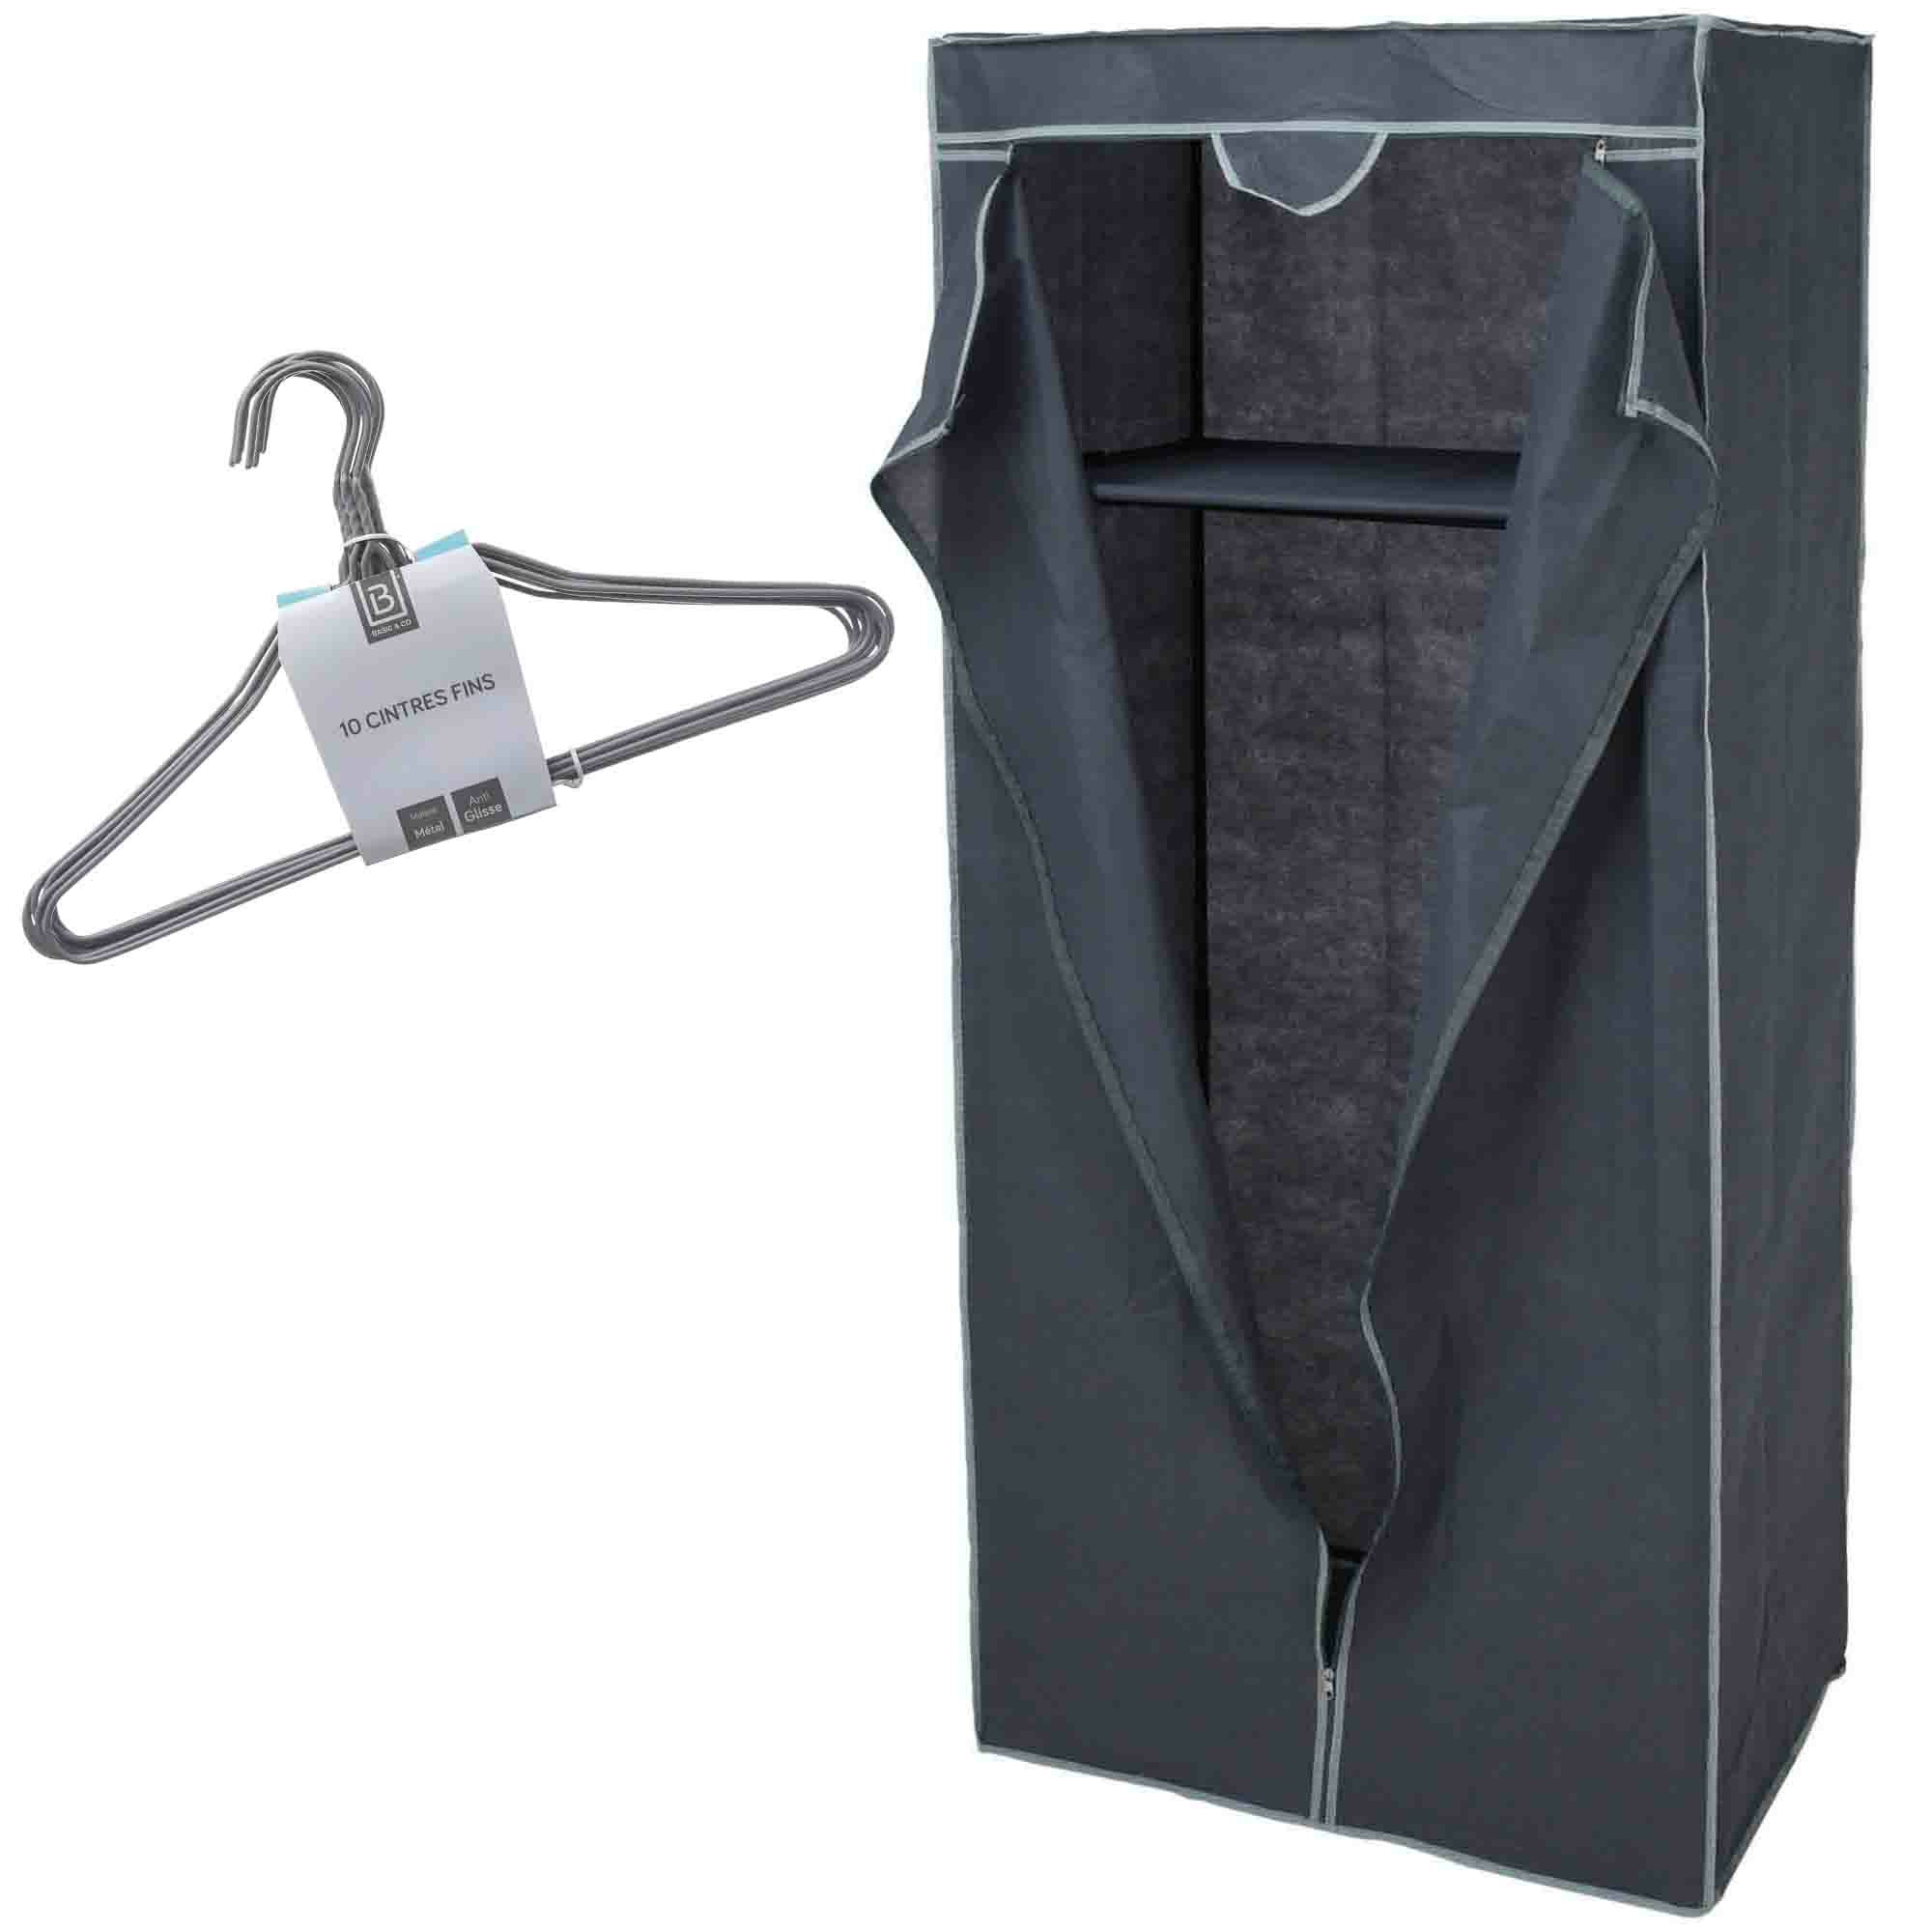 Set van mobiele kledingkast met kledinghangers opvouwbaar grijs